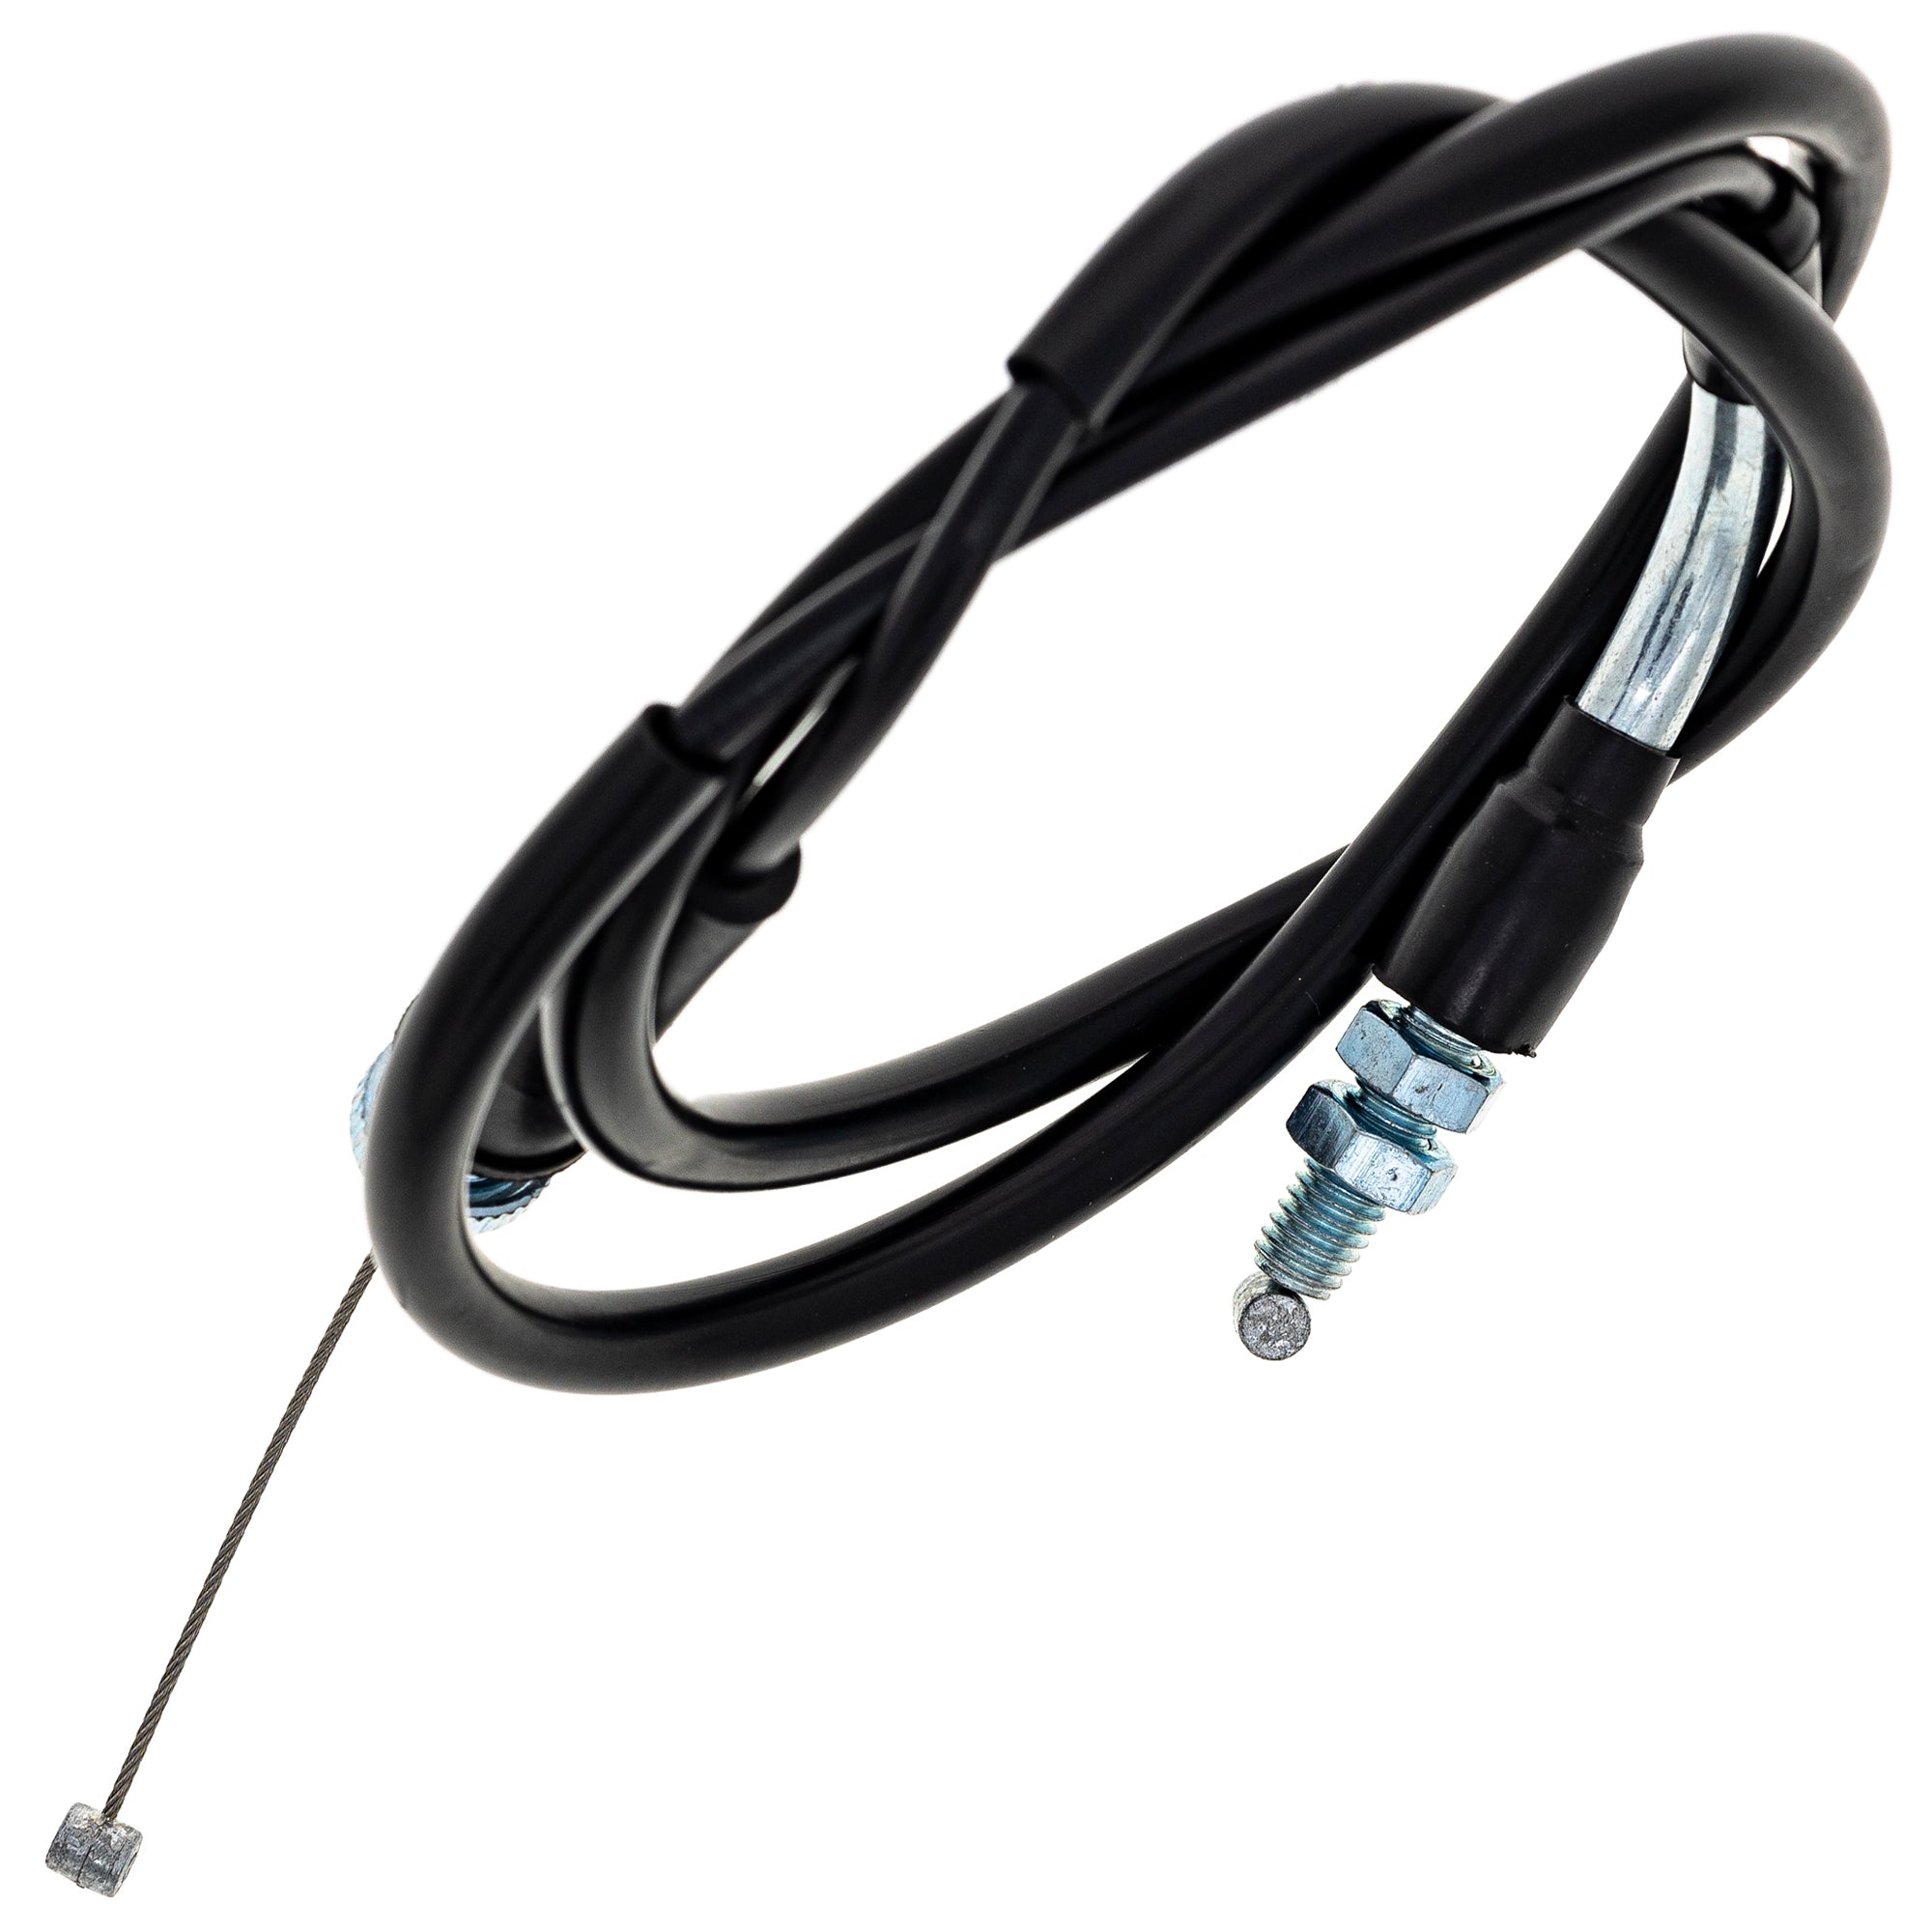 Throttle Cable for Suzuki Quadsport Z400 LTZ400 58300-33H01